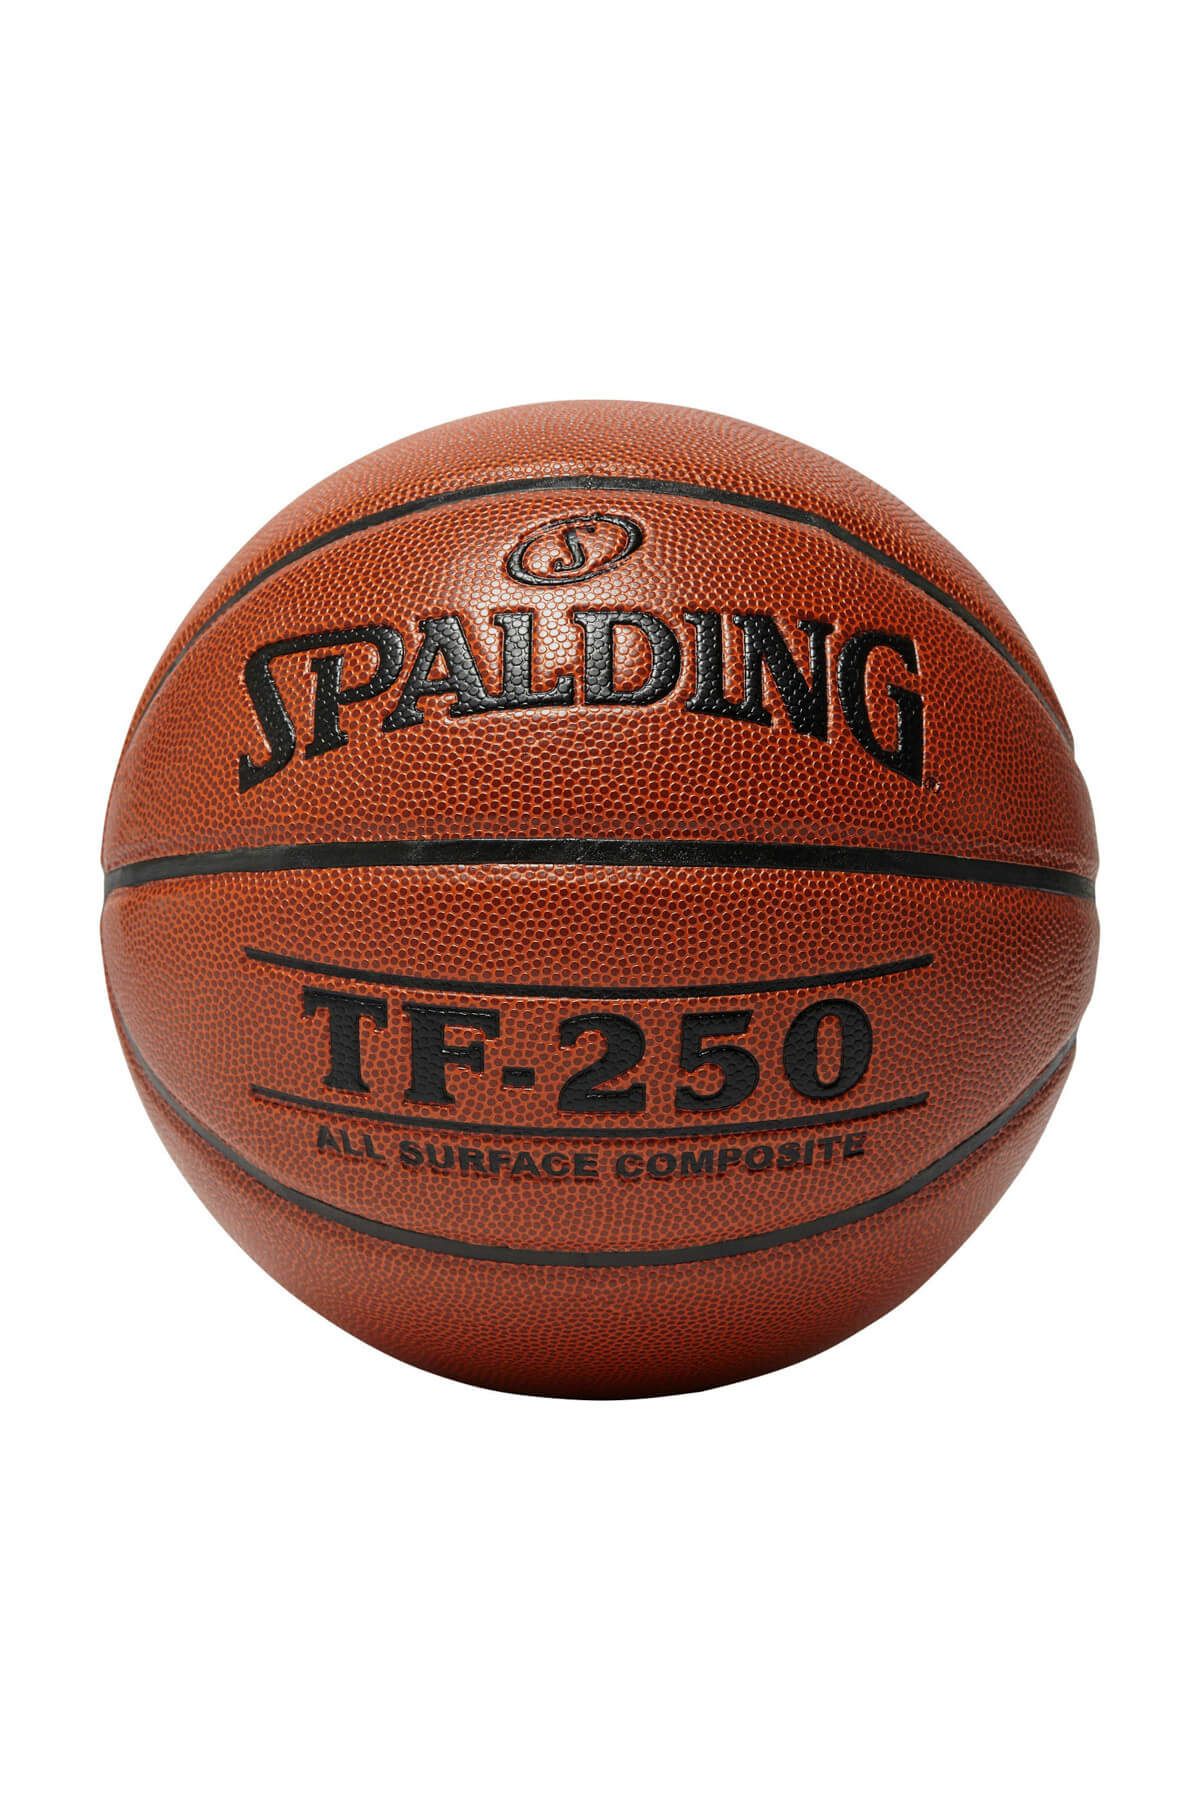 Spalding Spalding Tf-250 All Surface Kompozit Deri No 7 Basketbol Topu